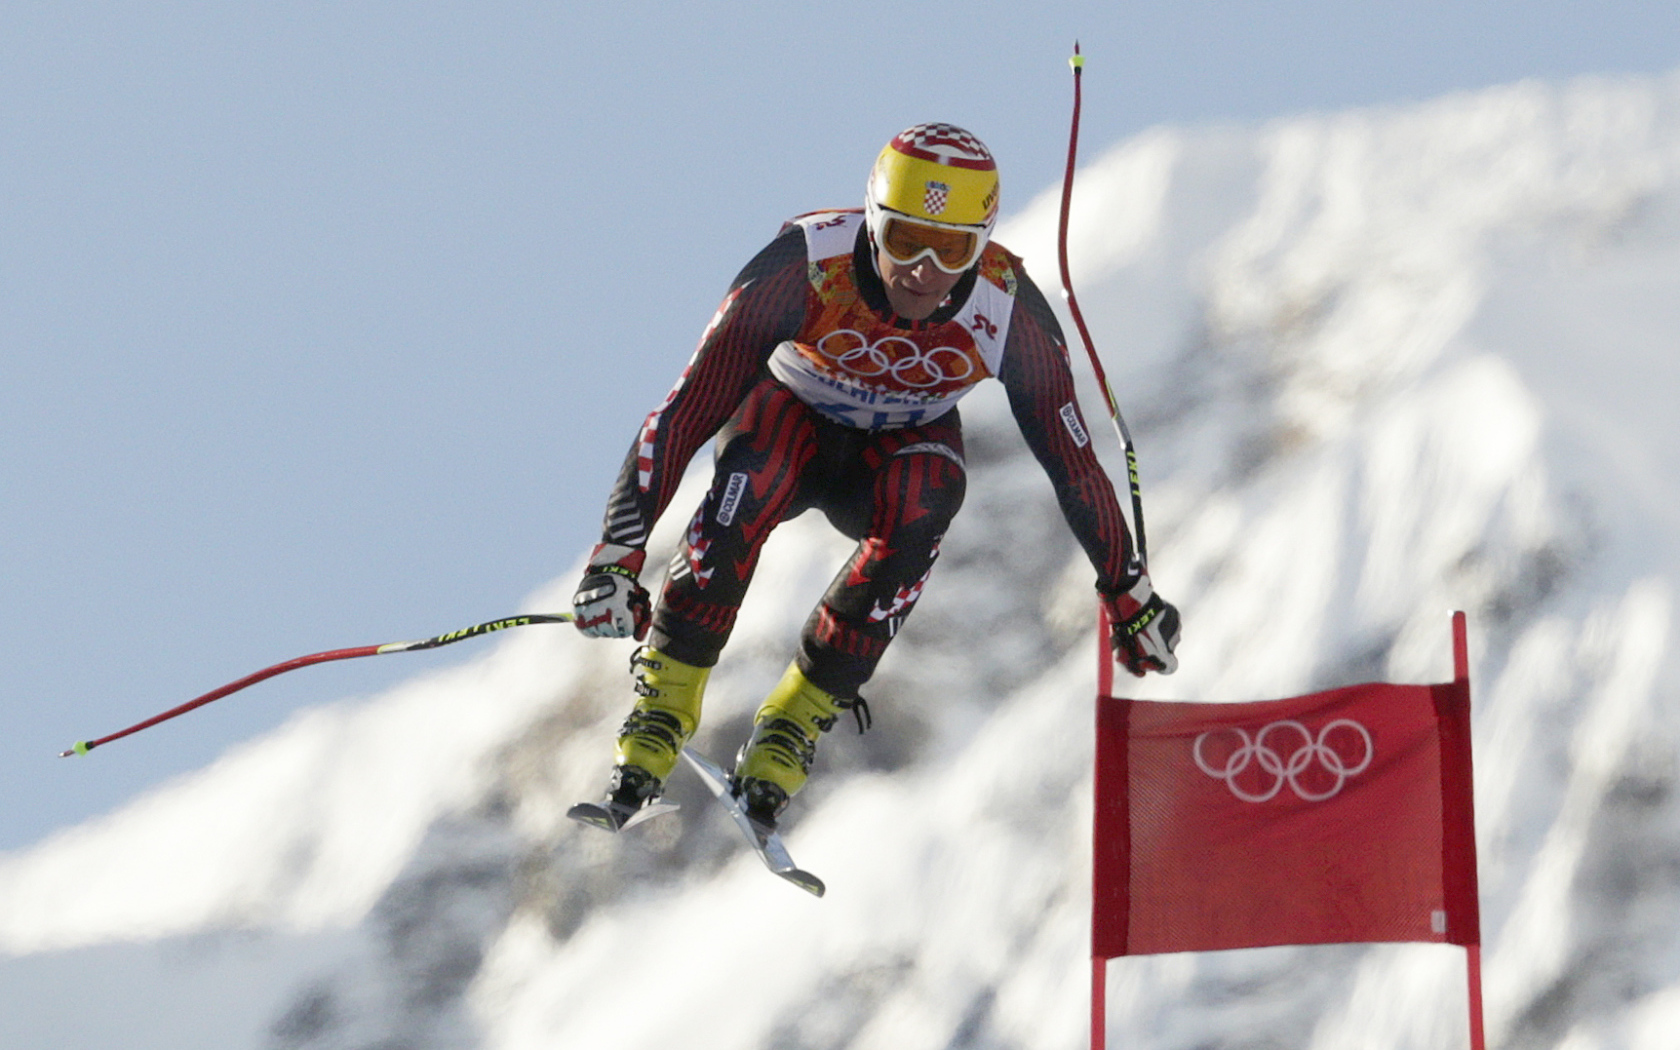 Croatian skier Ivica Kostelic winner of the silver medal